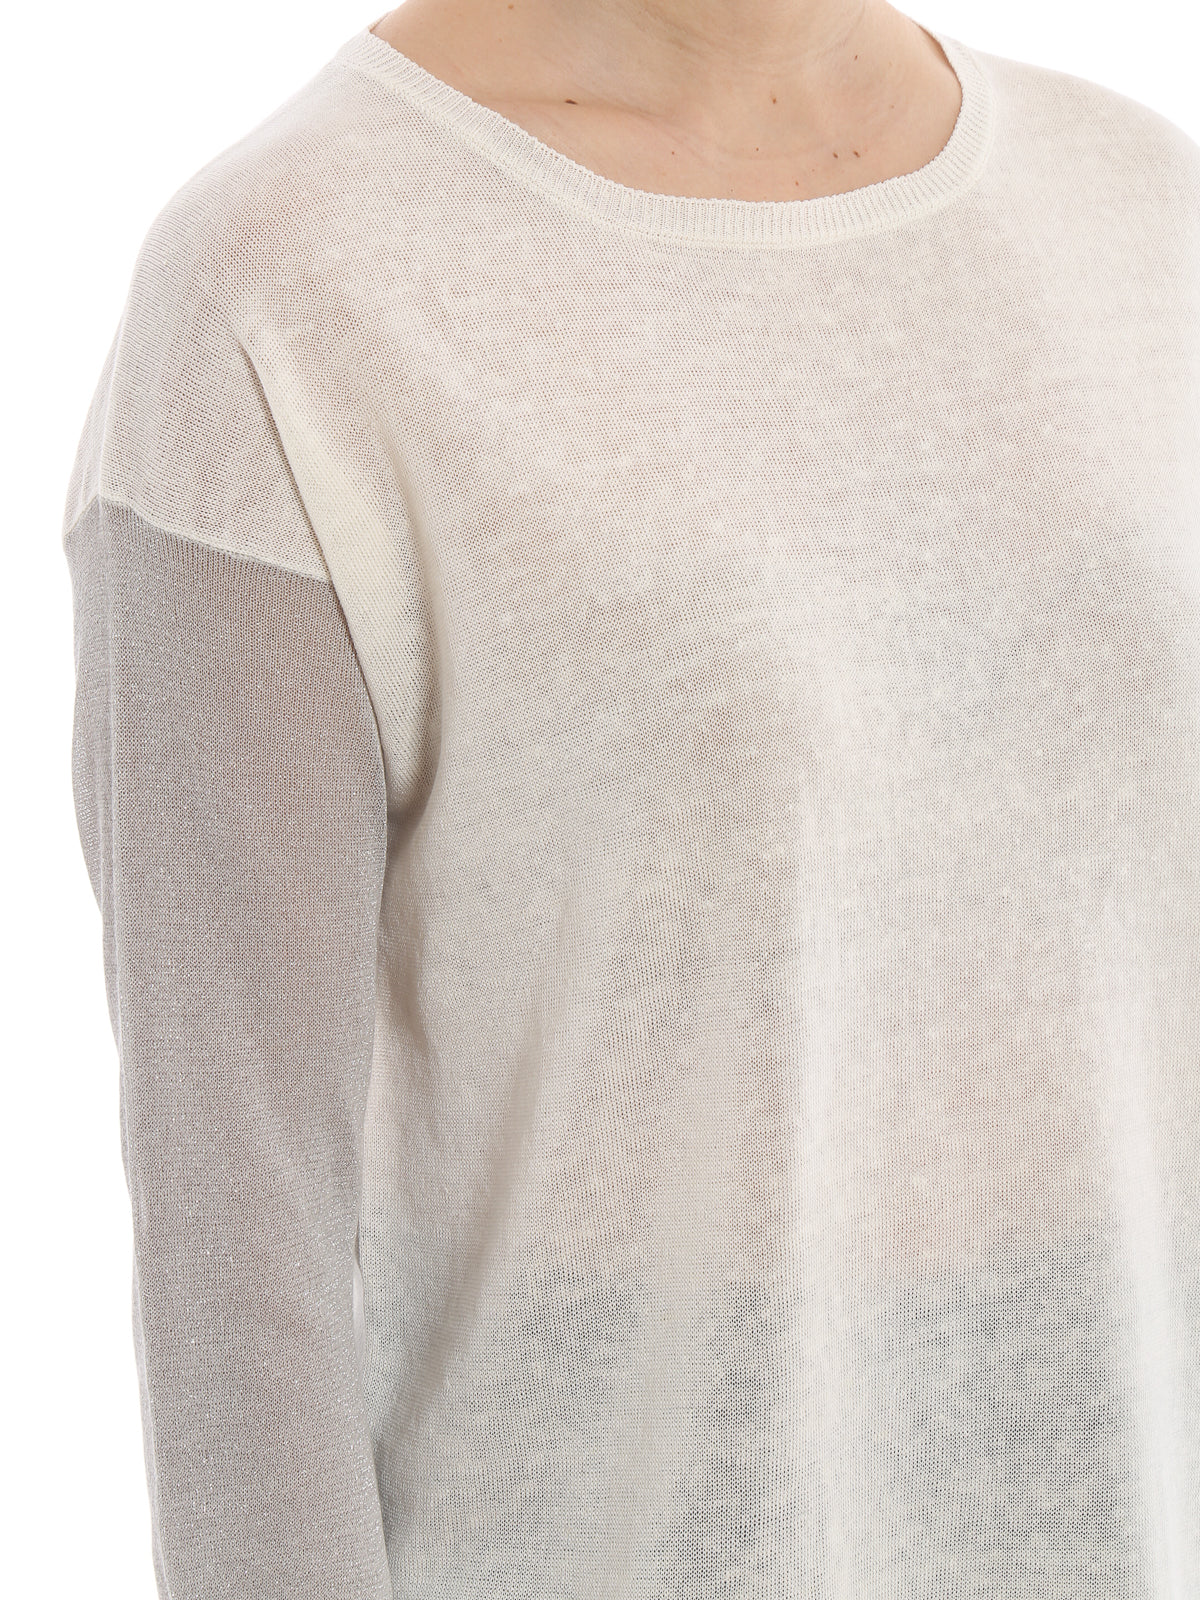 Fabiana Filippi Sleeve Shirt In Lurex White Woman-4